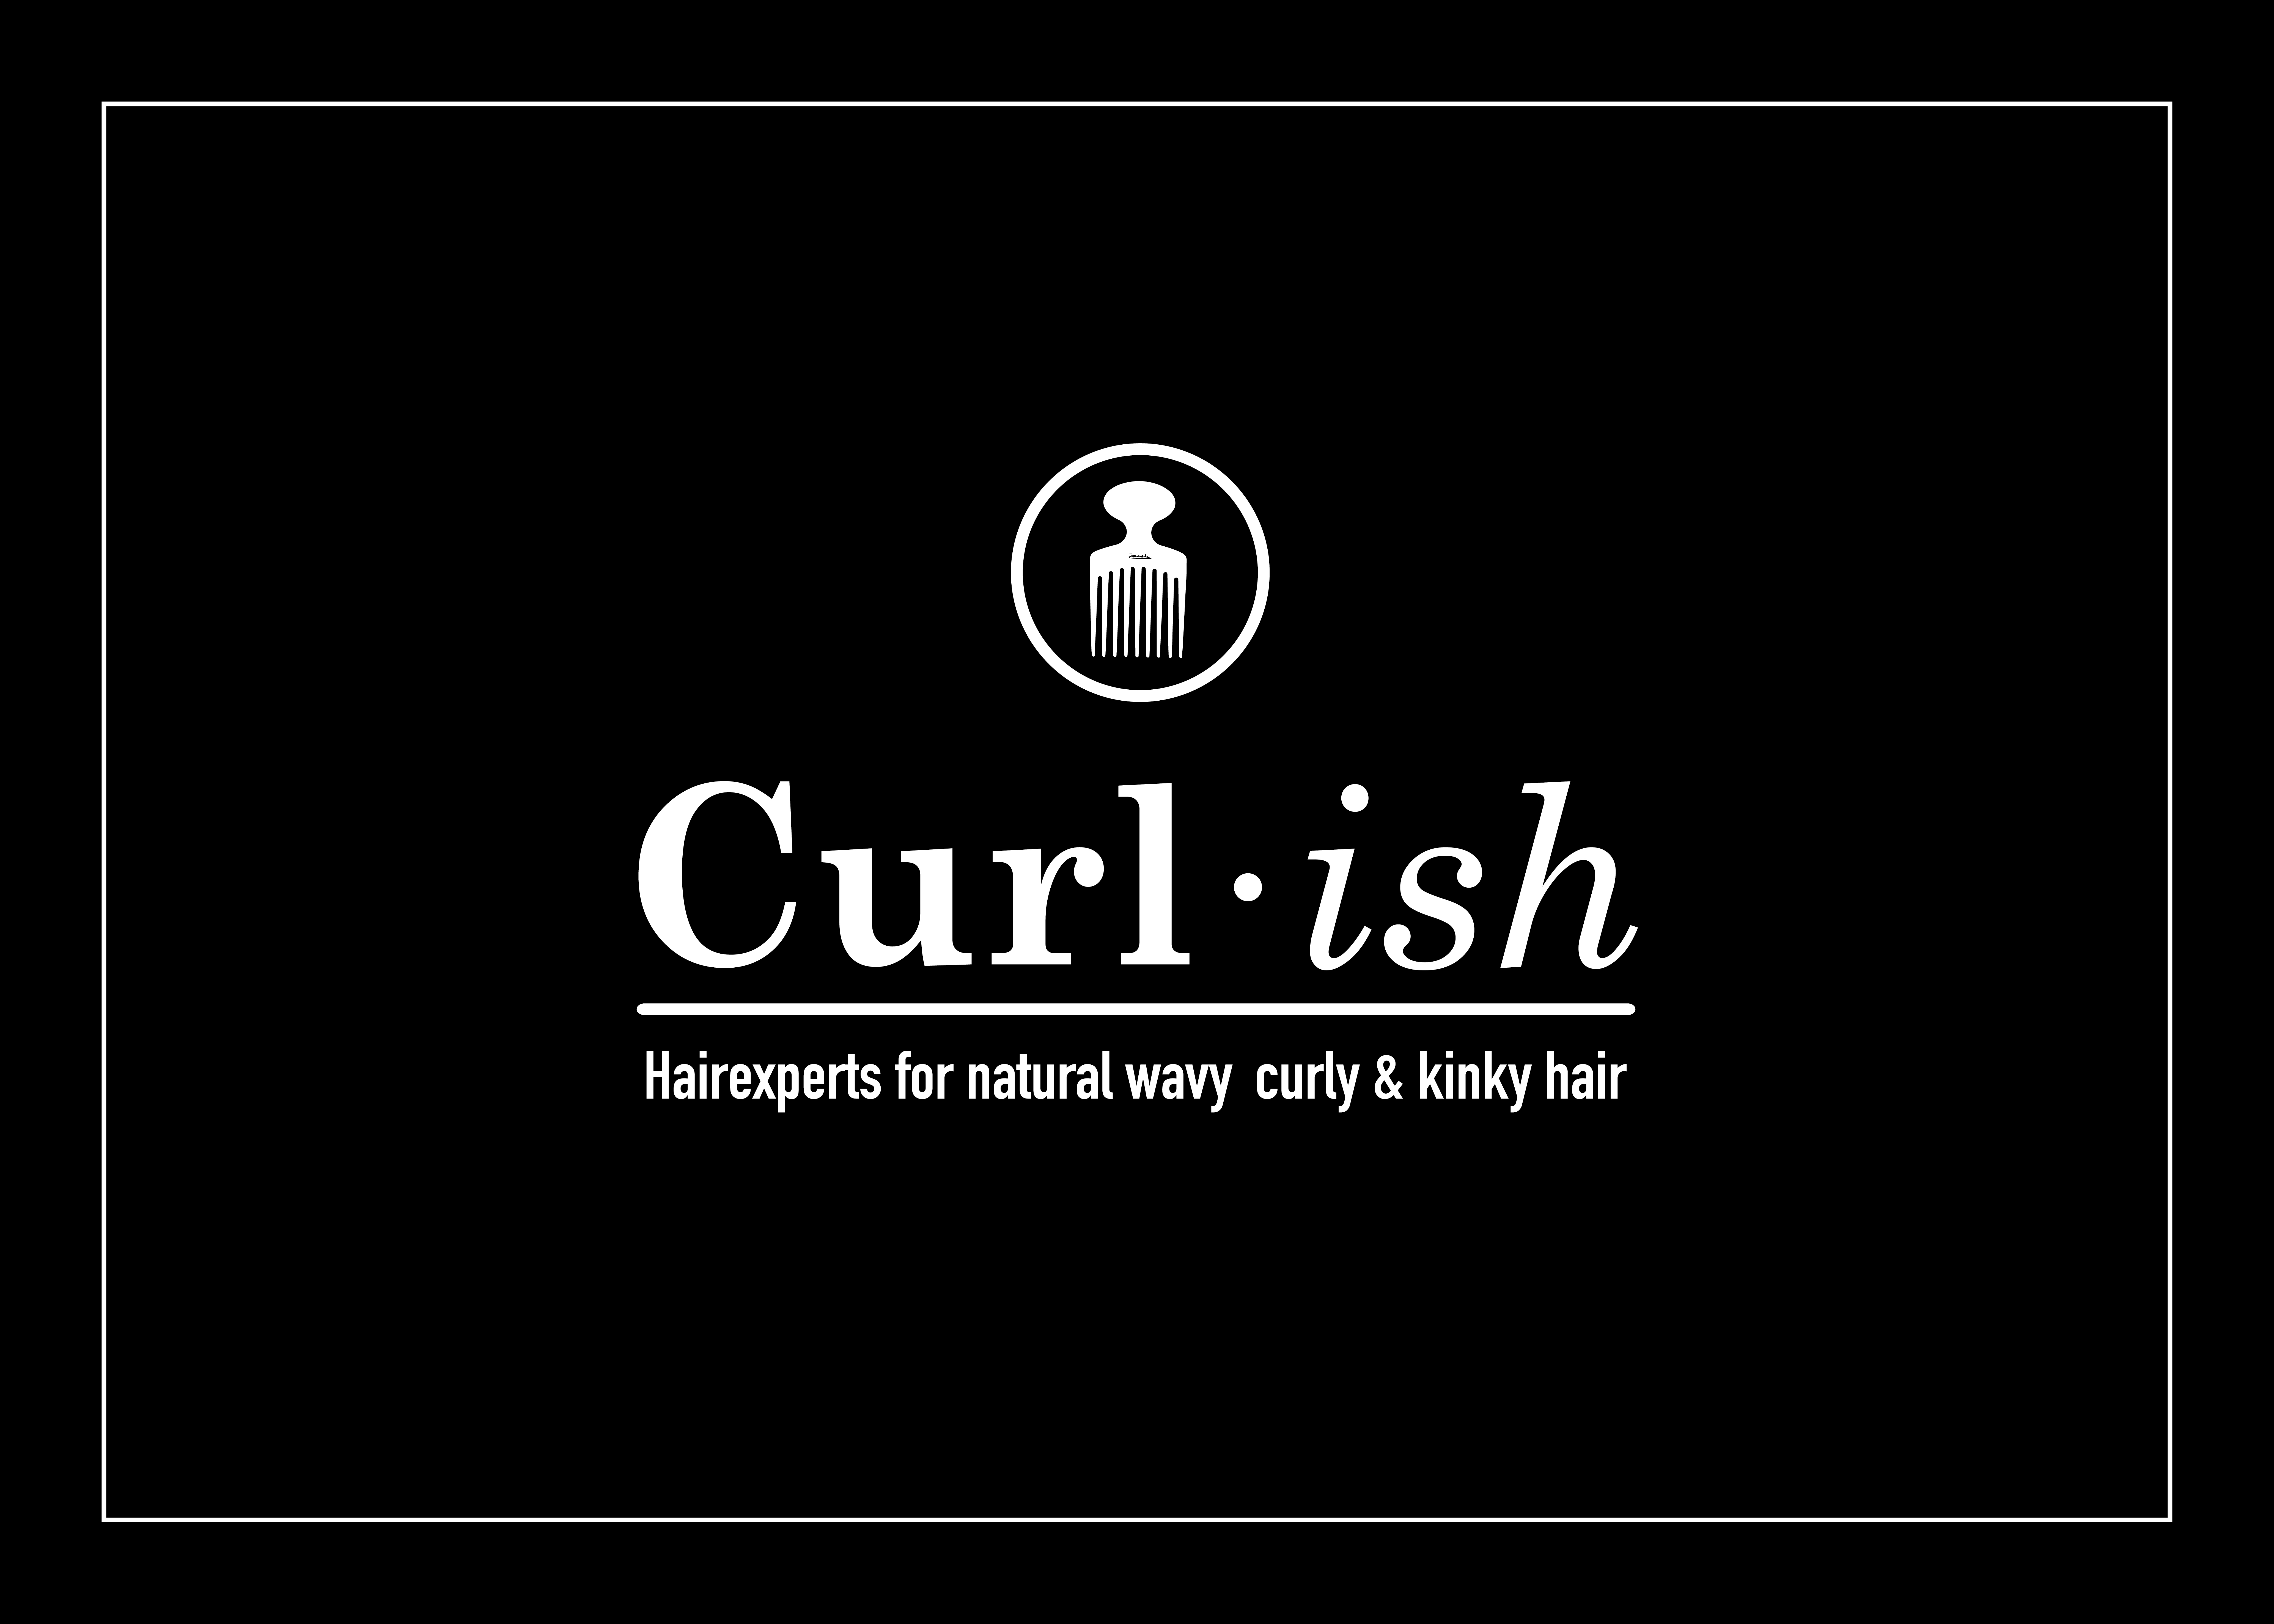 Curl-ish GmbH